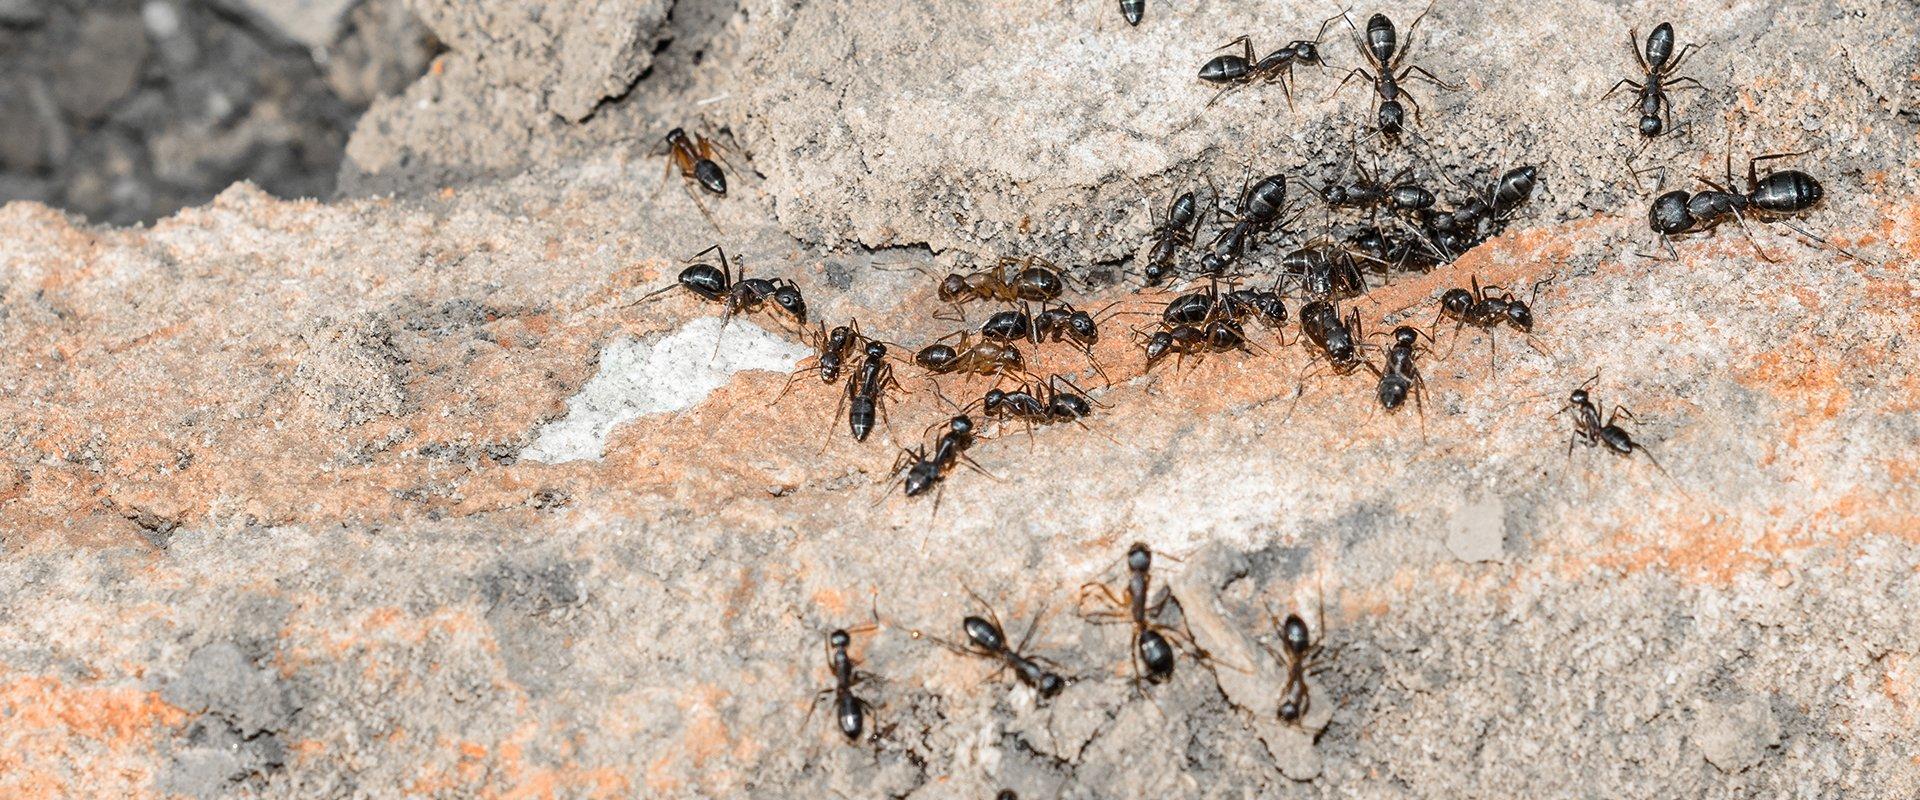 dozens of ants on the ground